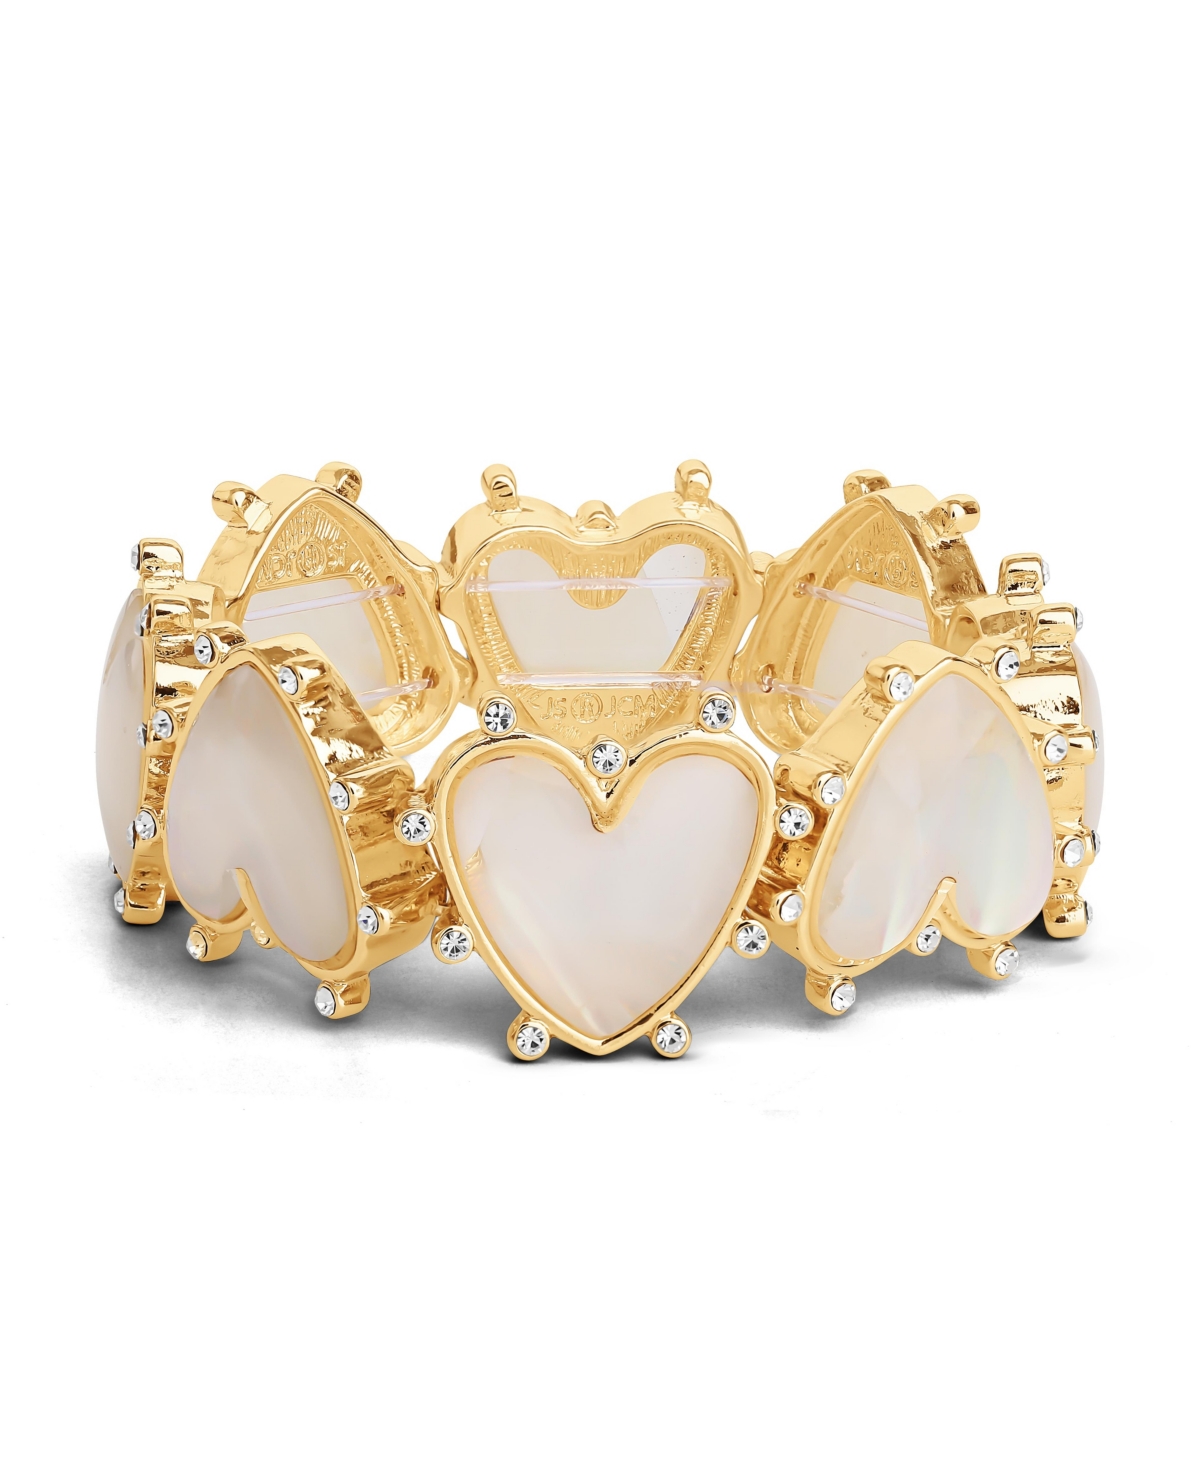 Womens Heart Bracelet - Gold-Tone Stretch Bracelet with Rhinestone Embellishments - Gold